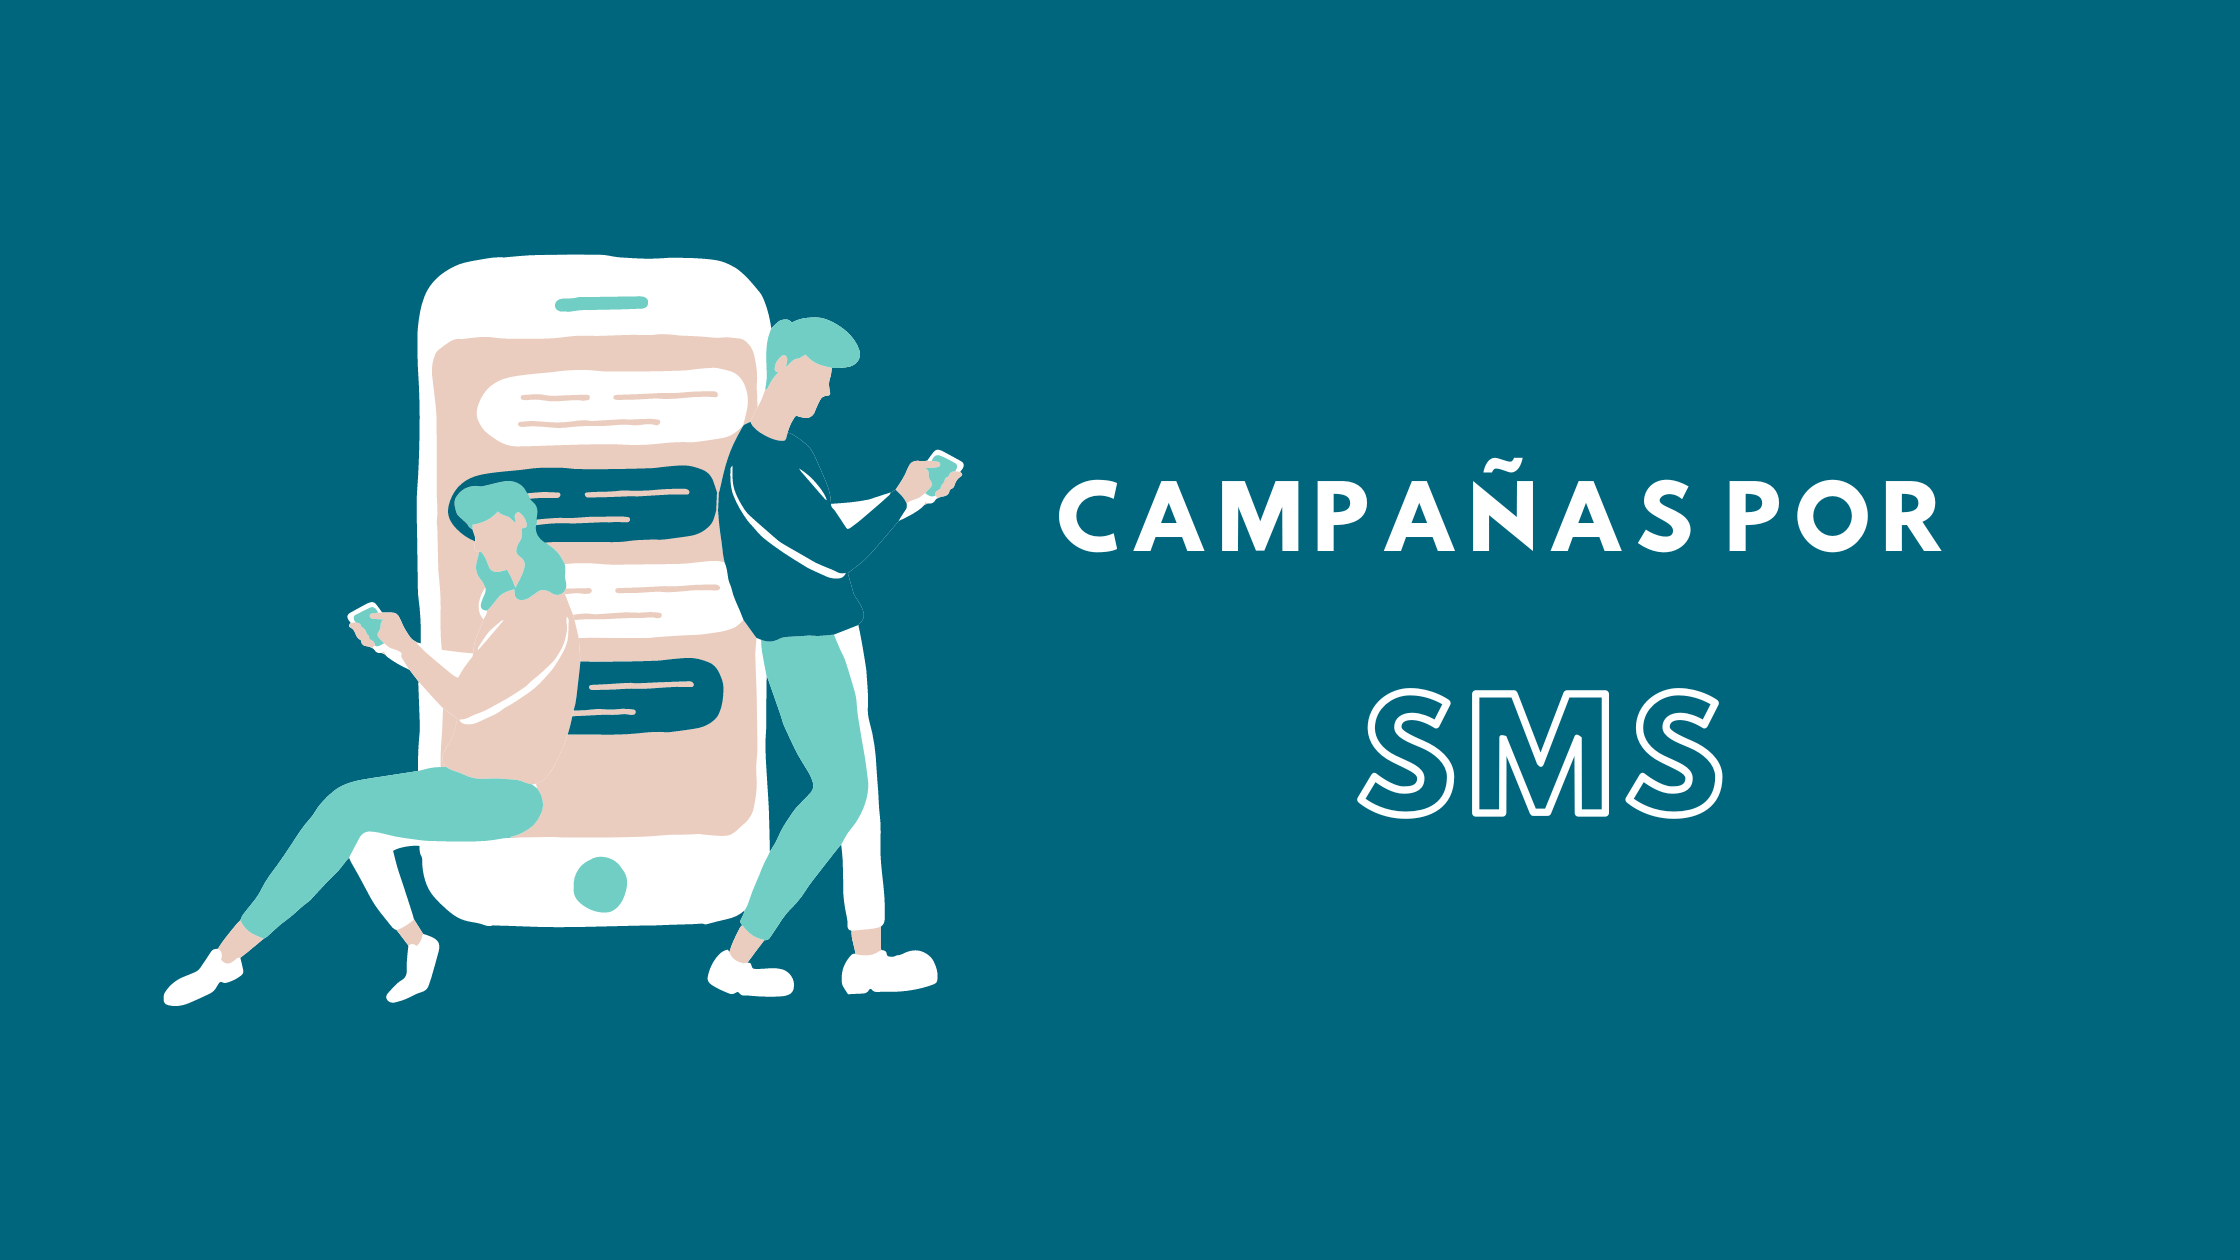 envio sms campañas sms marketing email maekting mailing sms smishing